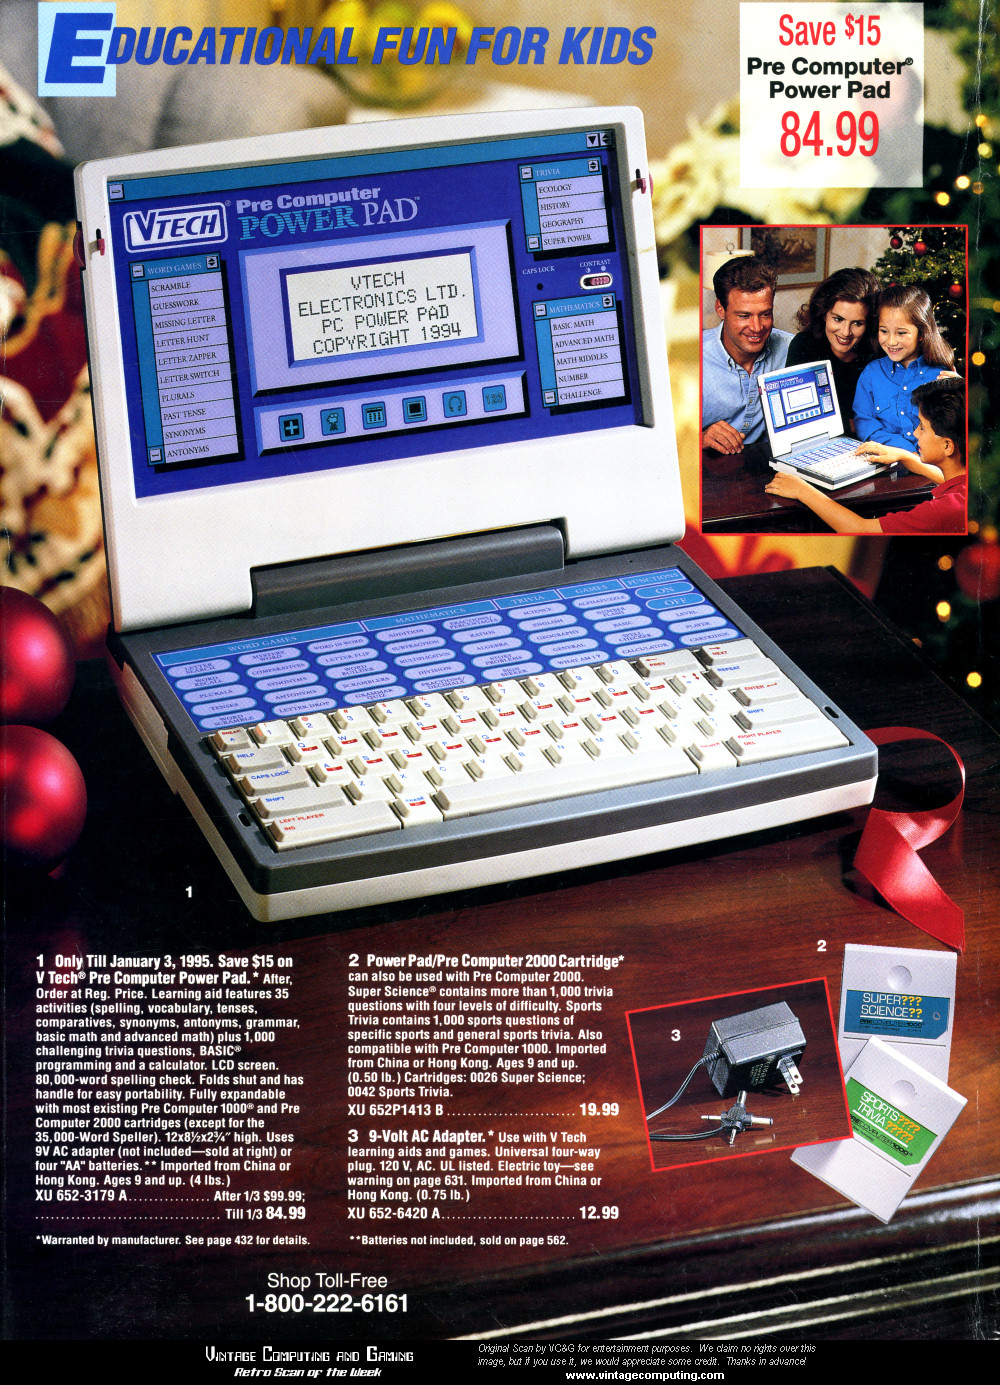 The Chessmaster 2000 Apple II Series Big Box PC Game